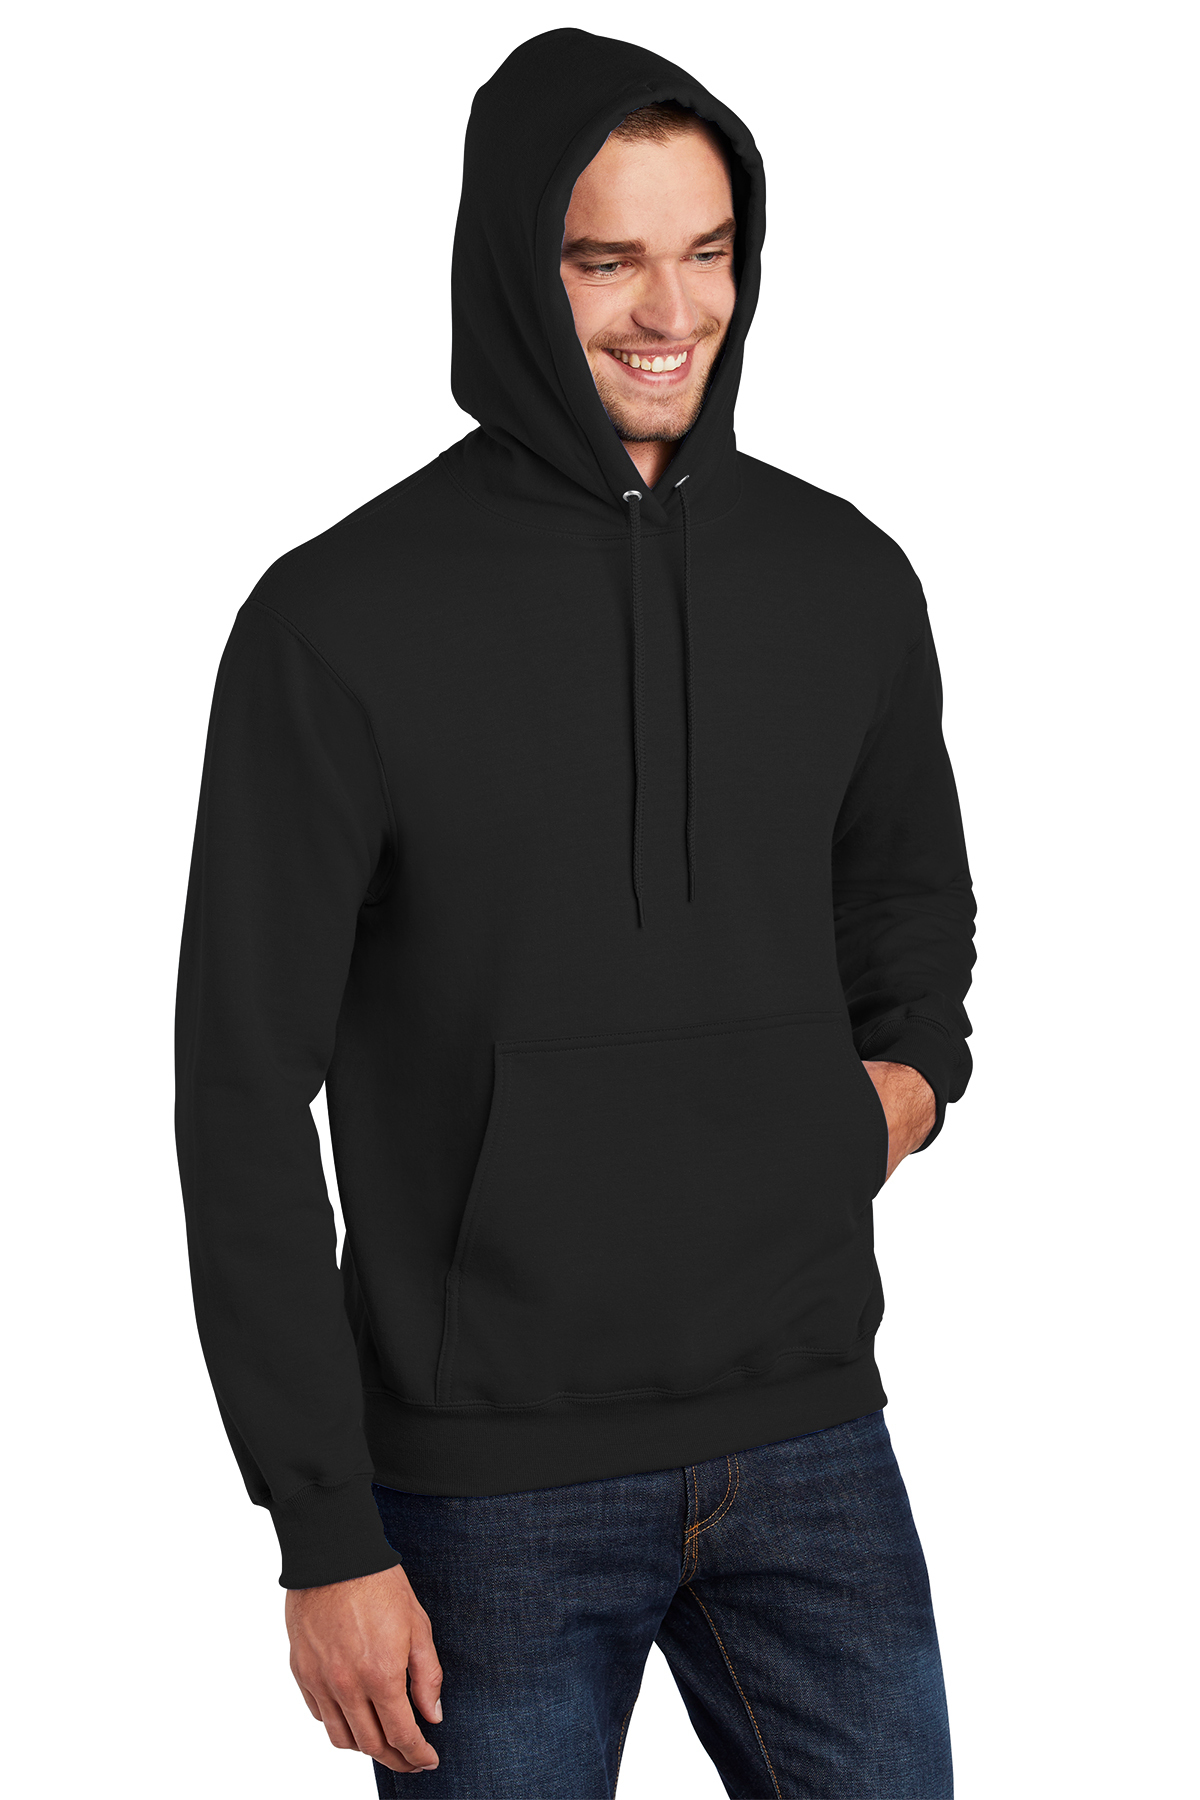 Port & Product | Hooded SanMar Company Pullover Essential | Sweatshirt Fleece